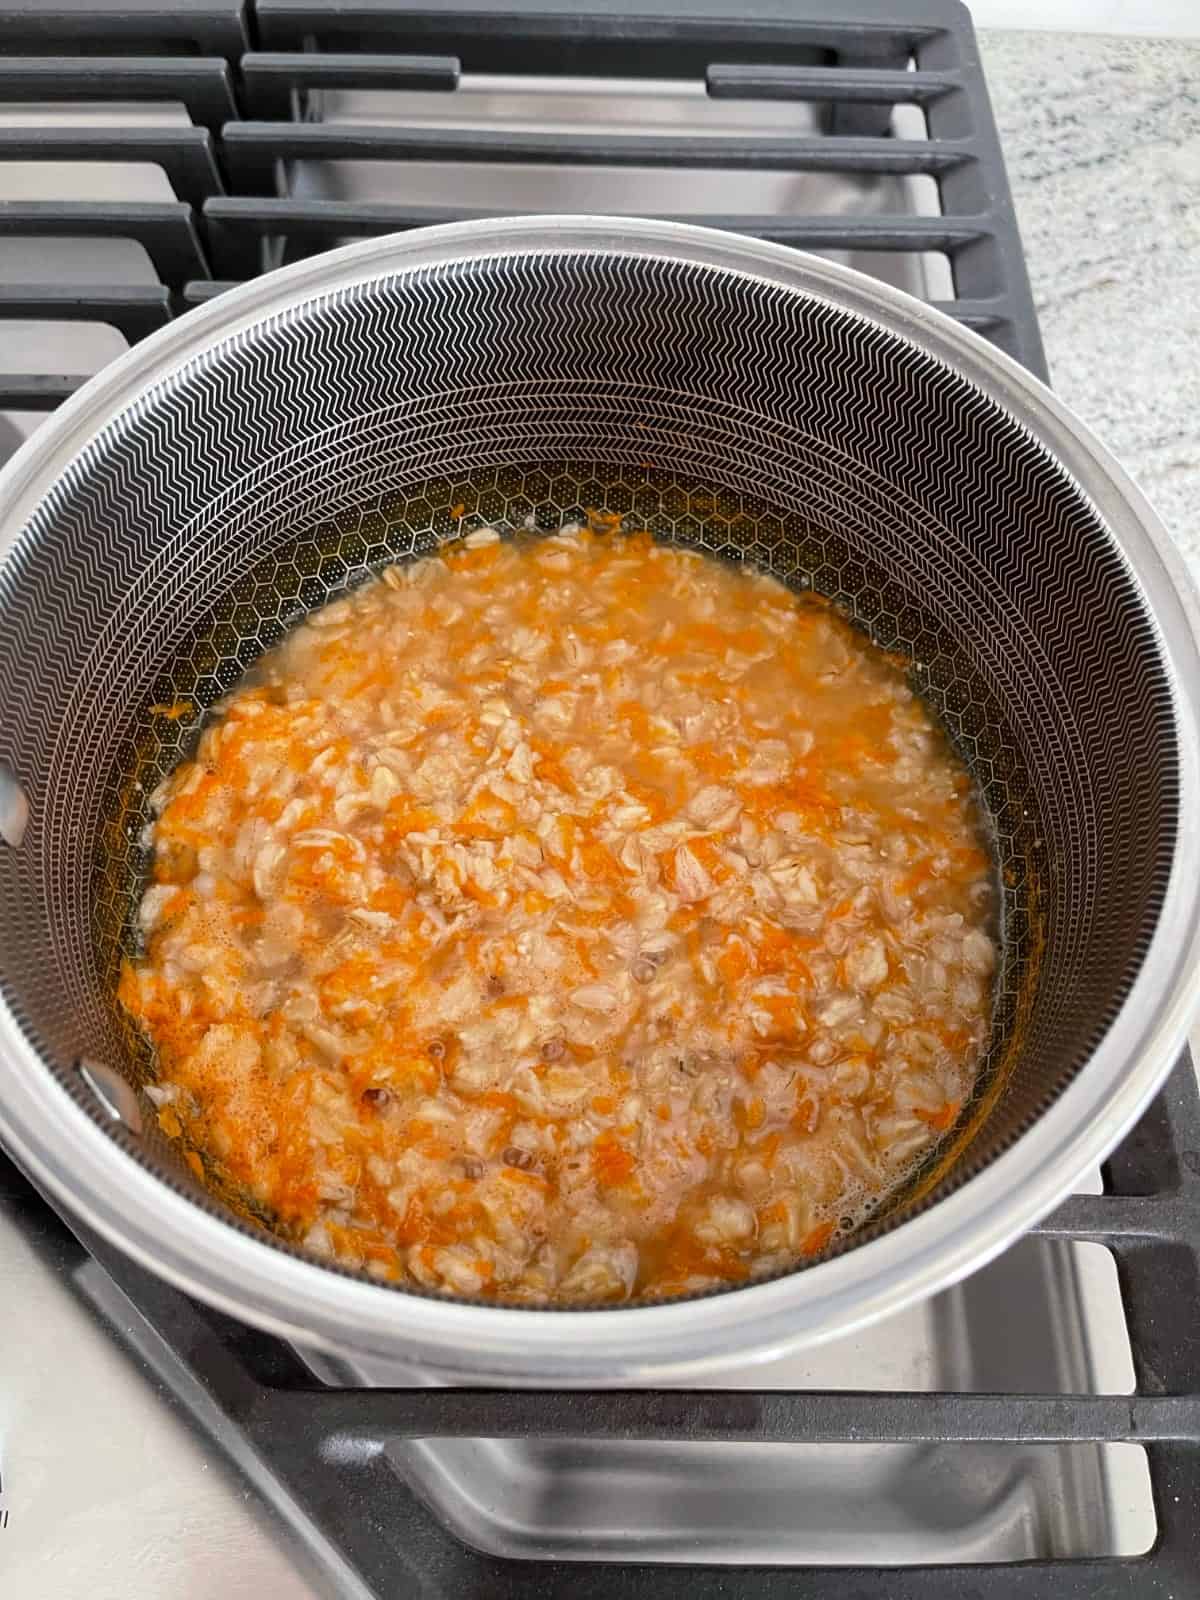 Simmering carrots, oatmeal and brown sugar in saucepan.